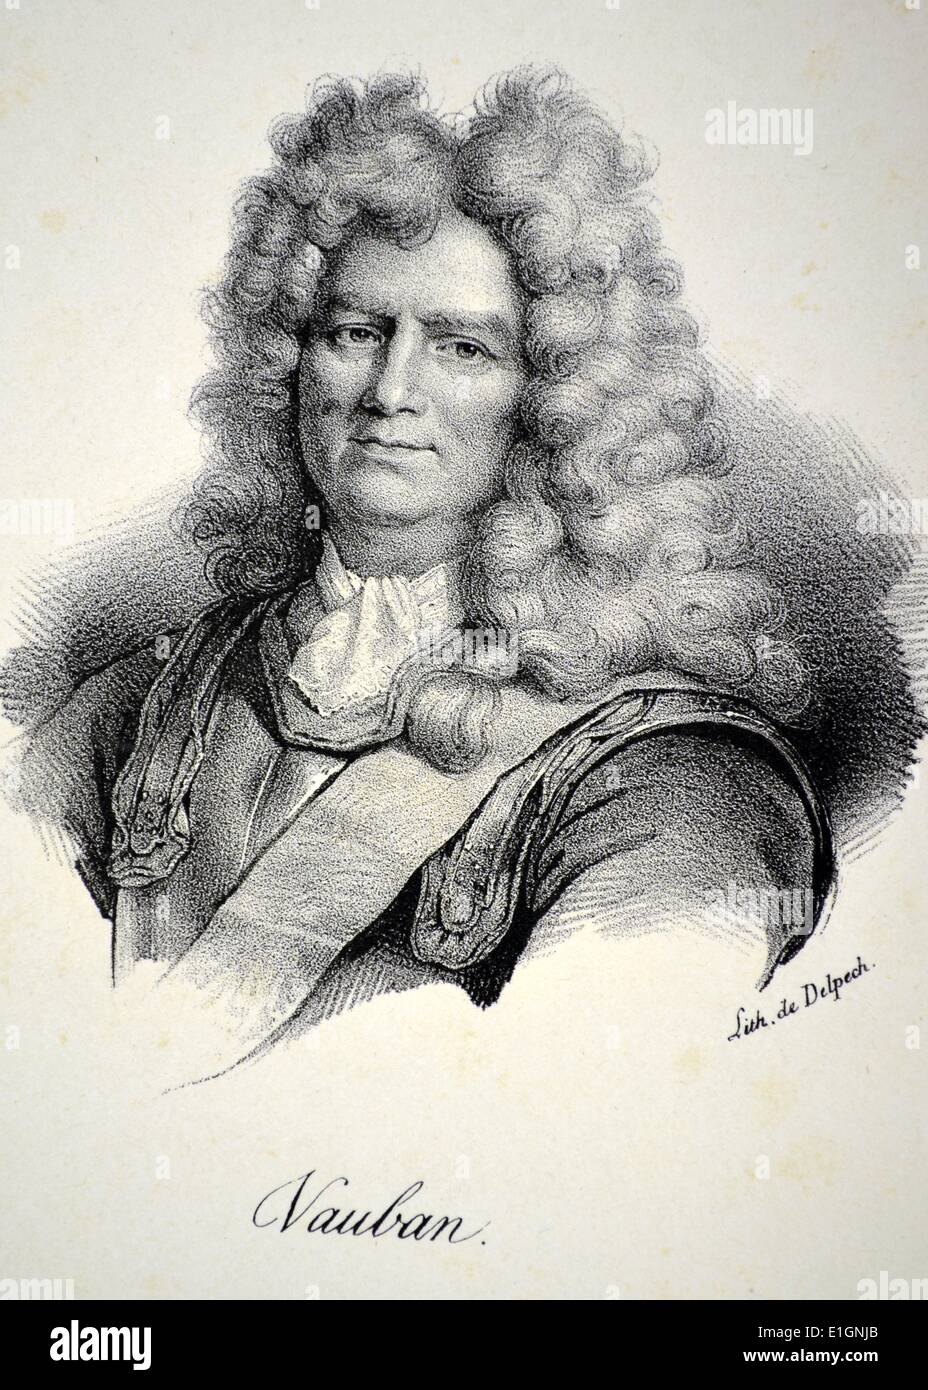 Sebastian le Prestre de Vauban (1633-1707) French miiitary engineer and Marshal of France. Lithograph, Paris, c1840. Stock Photo